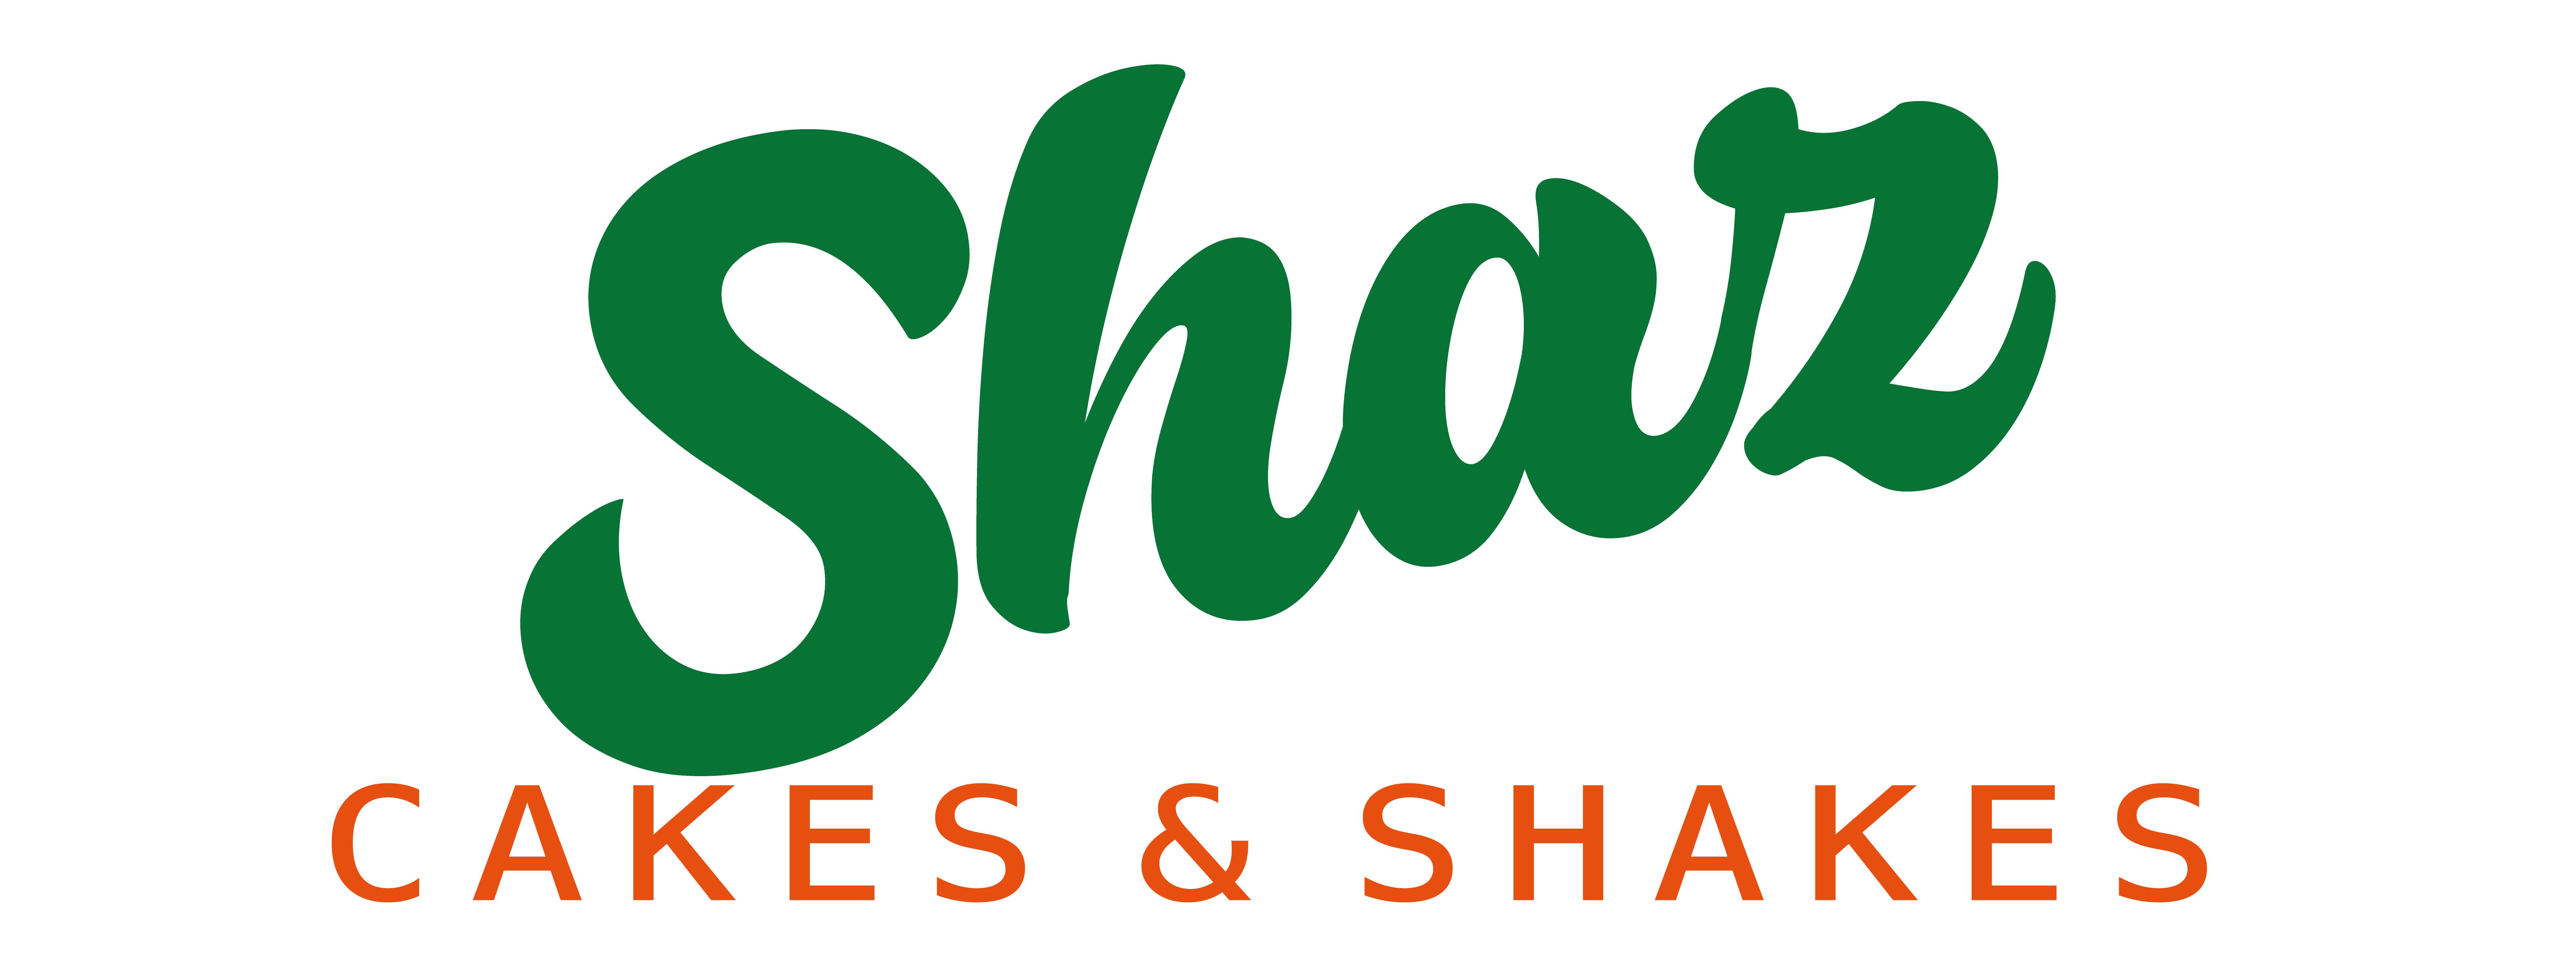 Shaz Cakes&Shakes